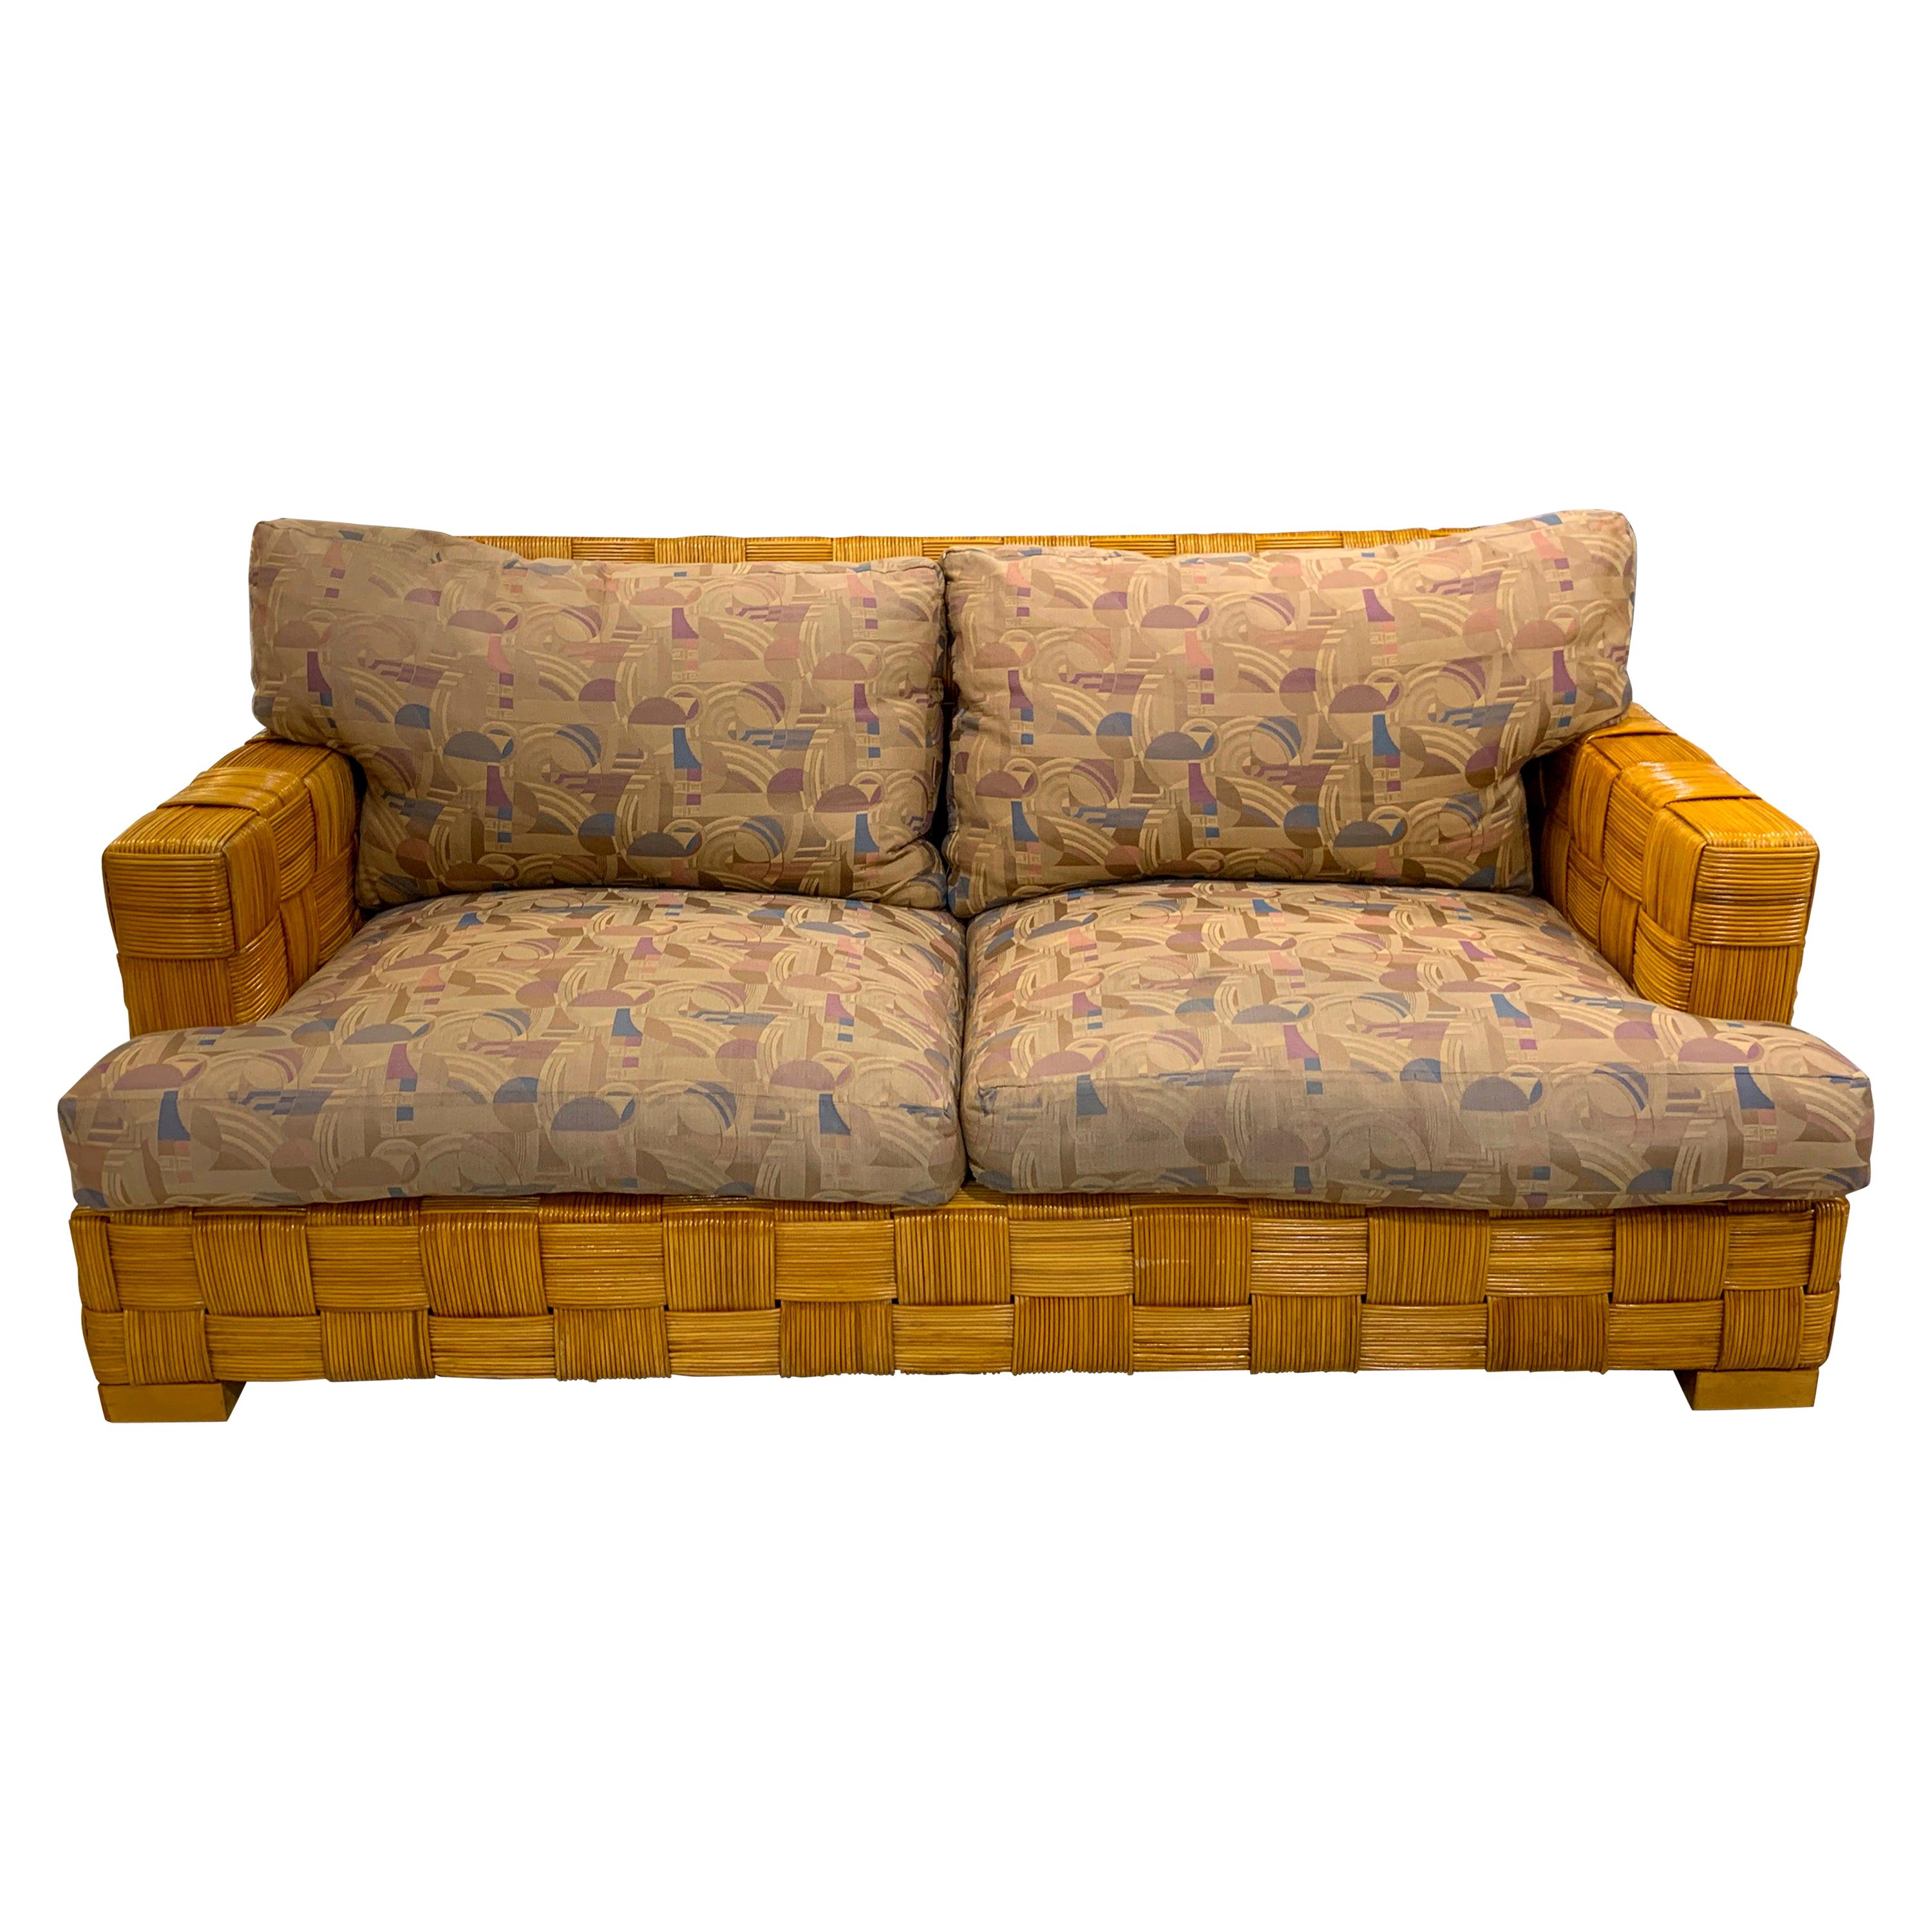 Donghia Woven Rattan "Block Island" Sofa by John Hutton For Sale